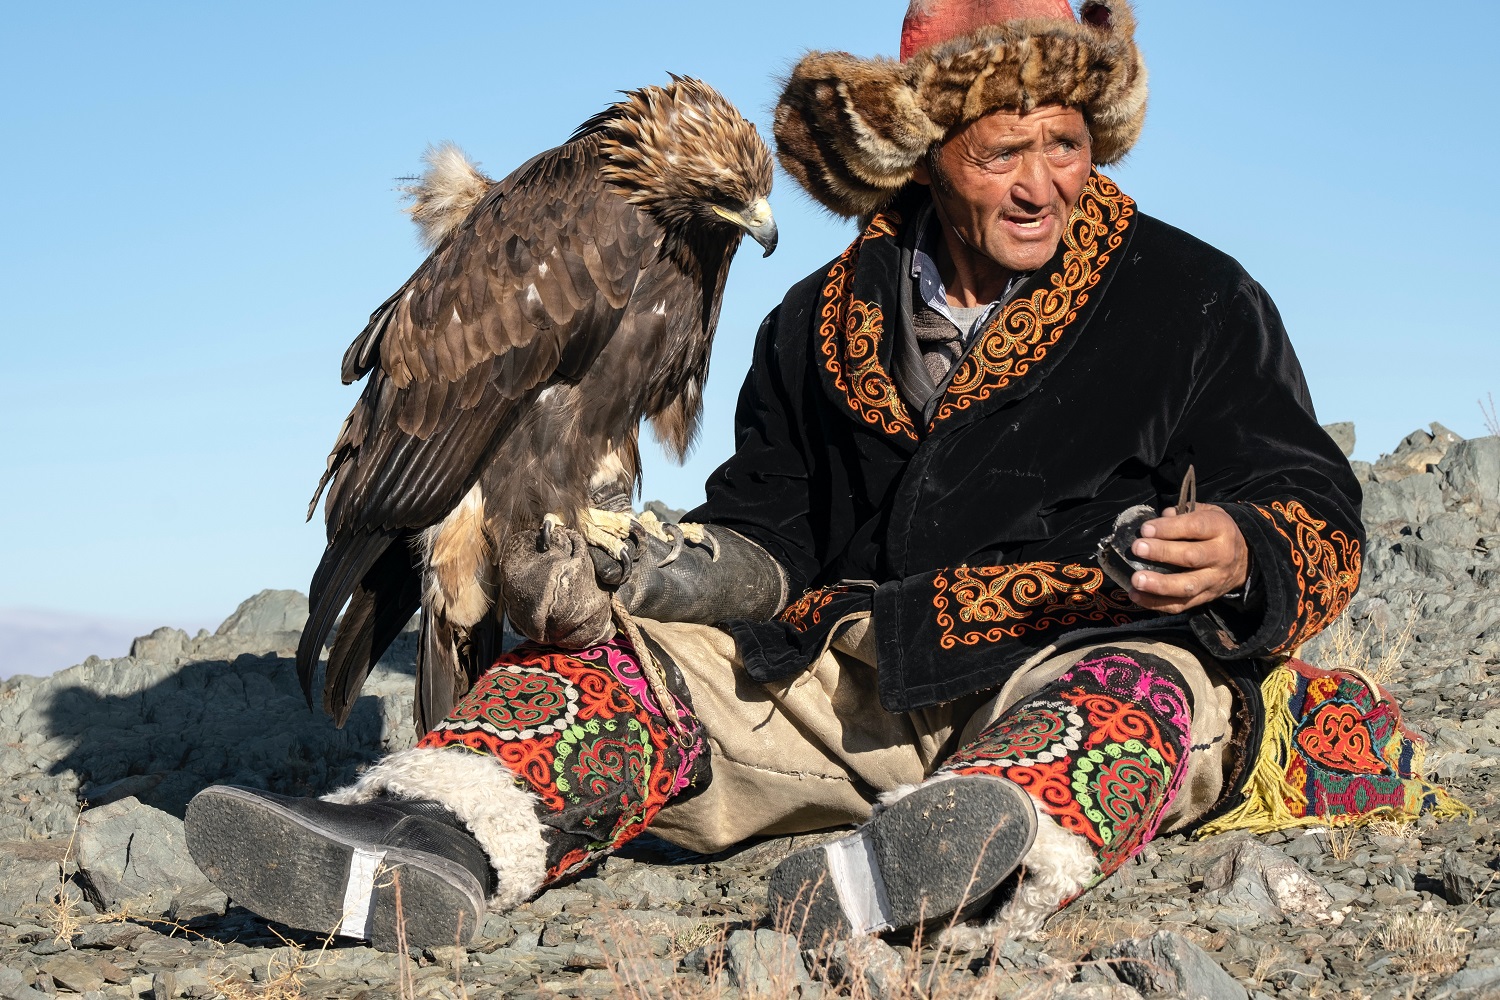 Kazakh Eagle Hunter with his eagle